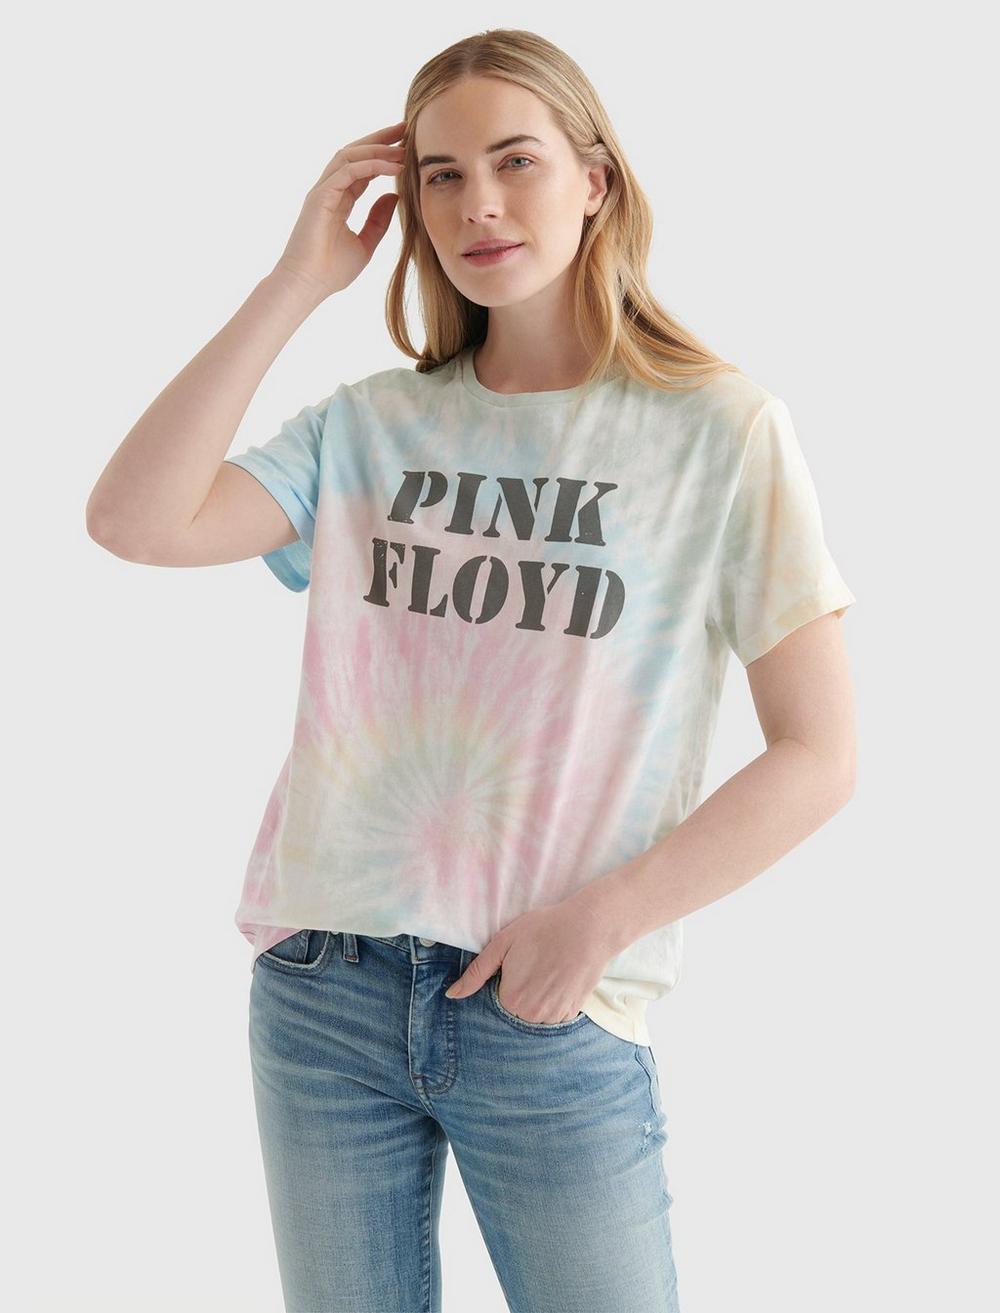 Pink floyd shirt tie dye